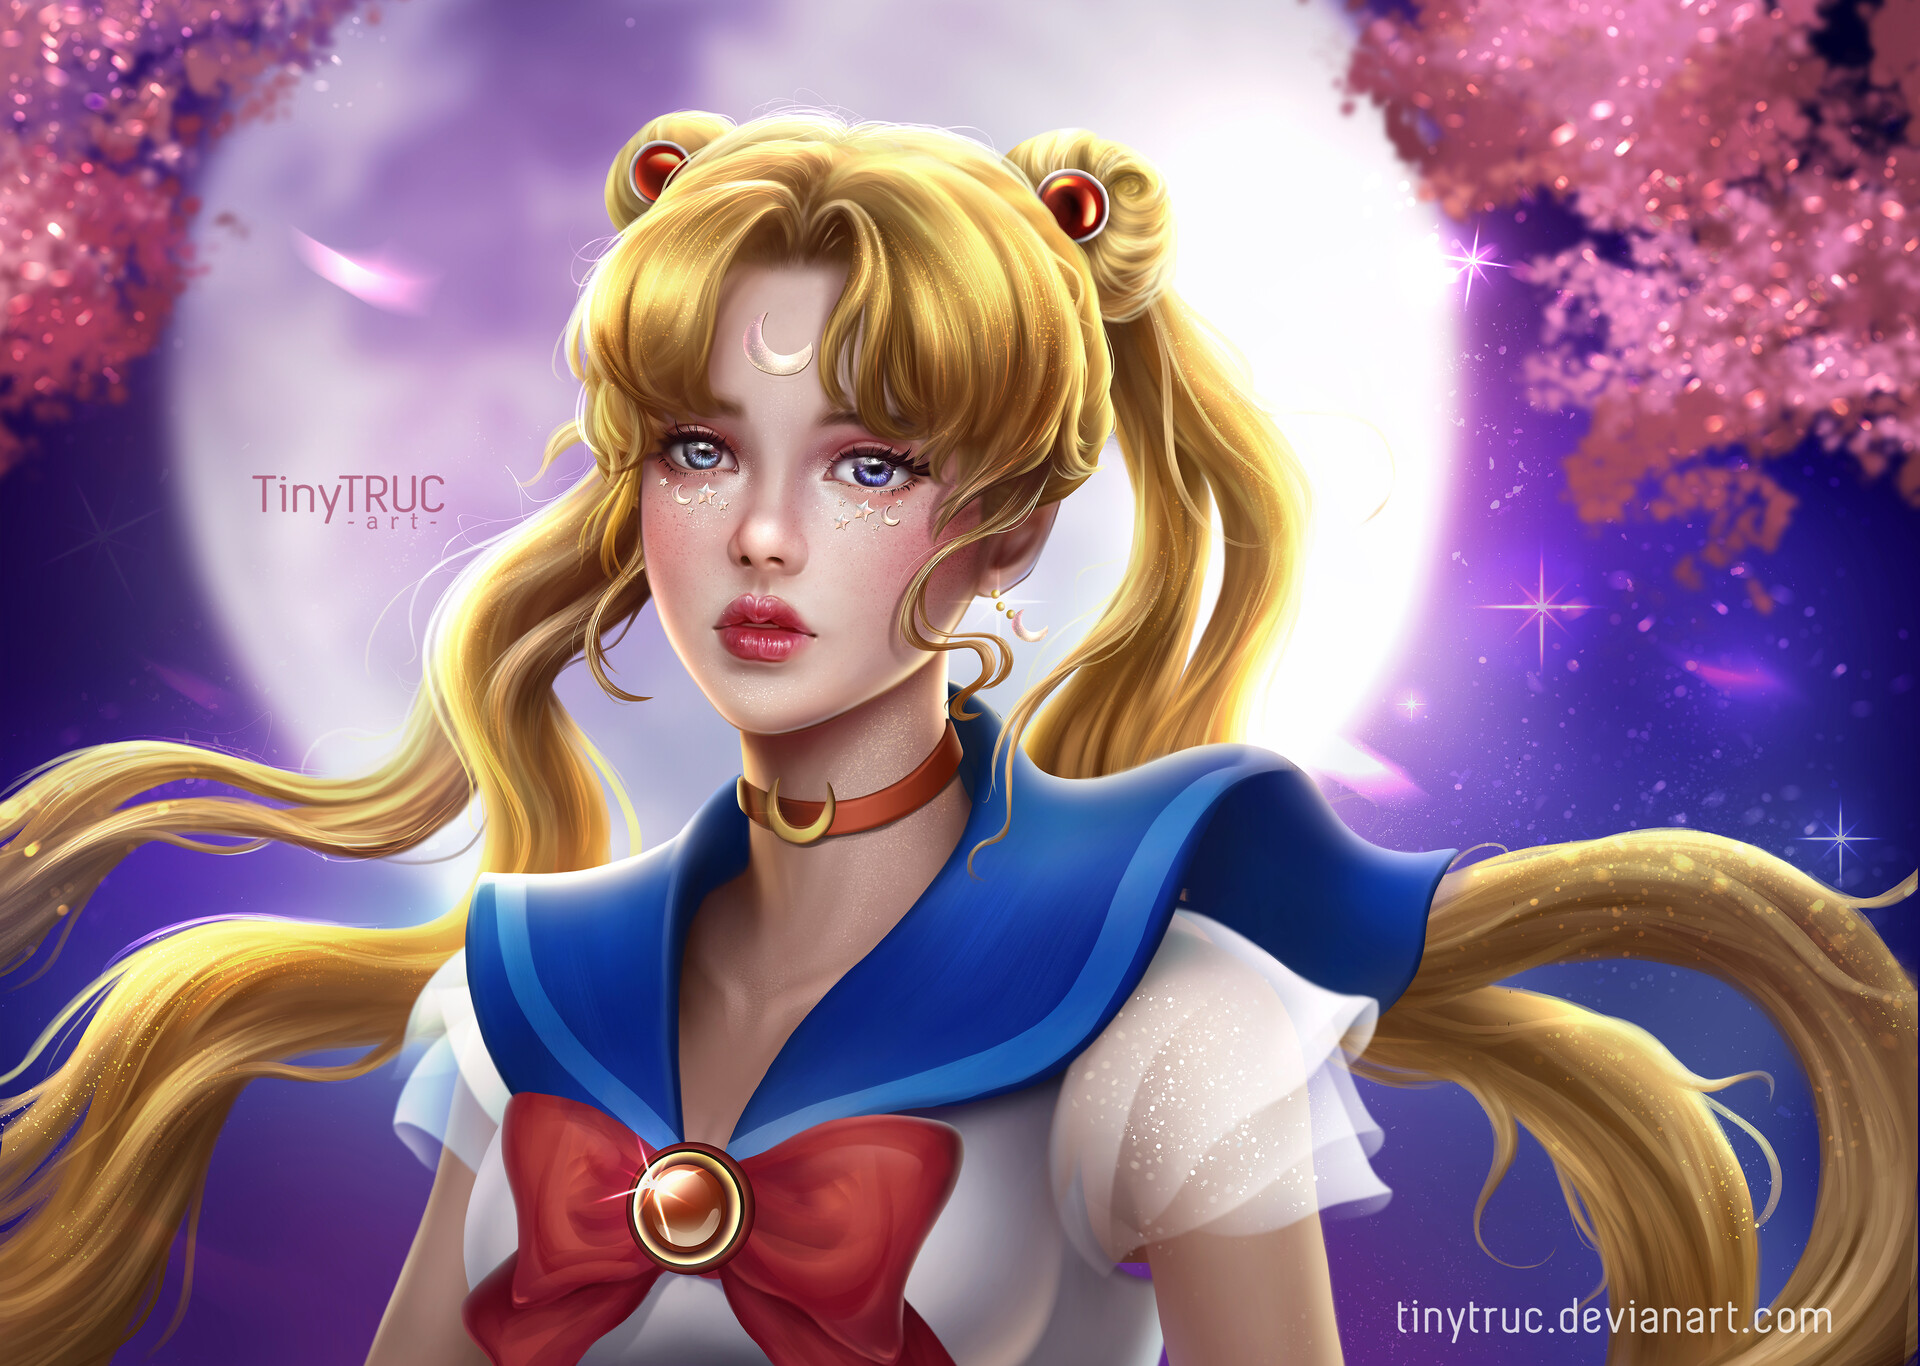 Sailor Moon fan art fantasy _ My page: Devianart: https://tinytruc.devianta...